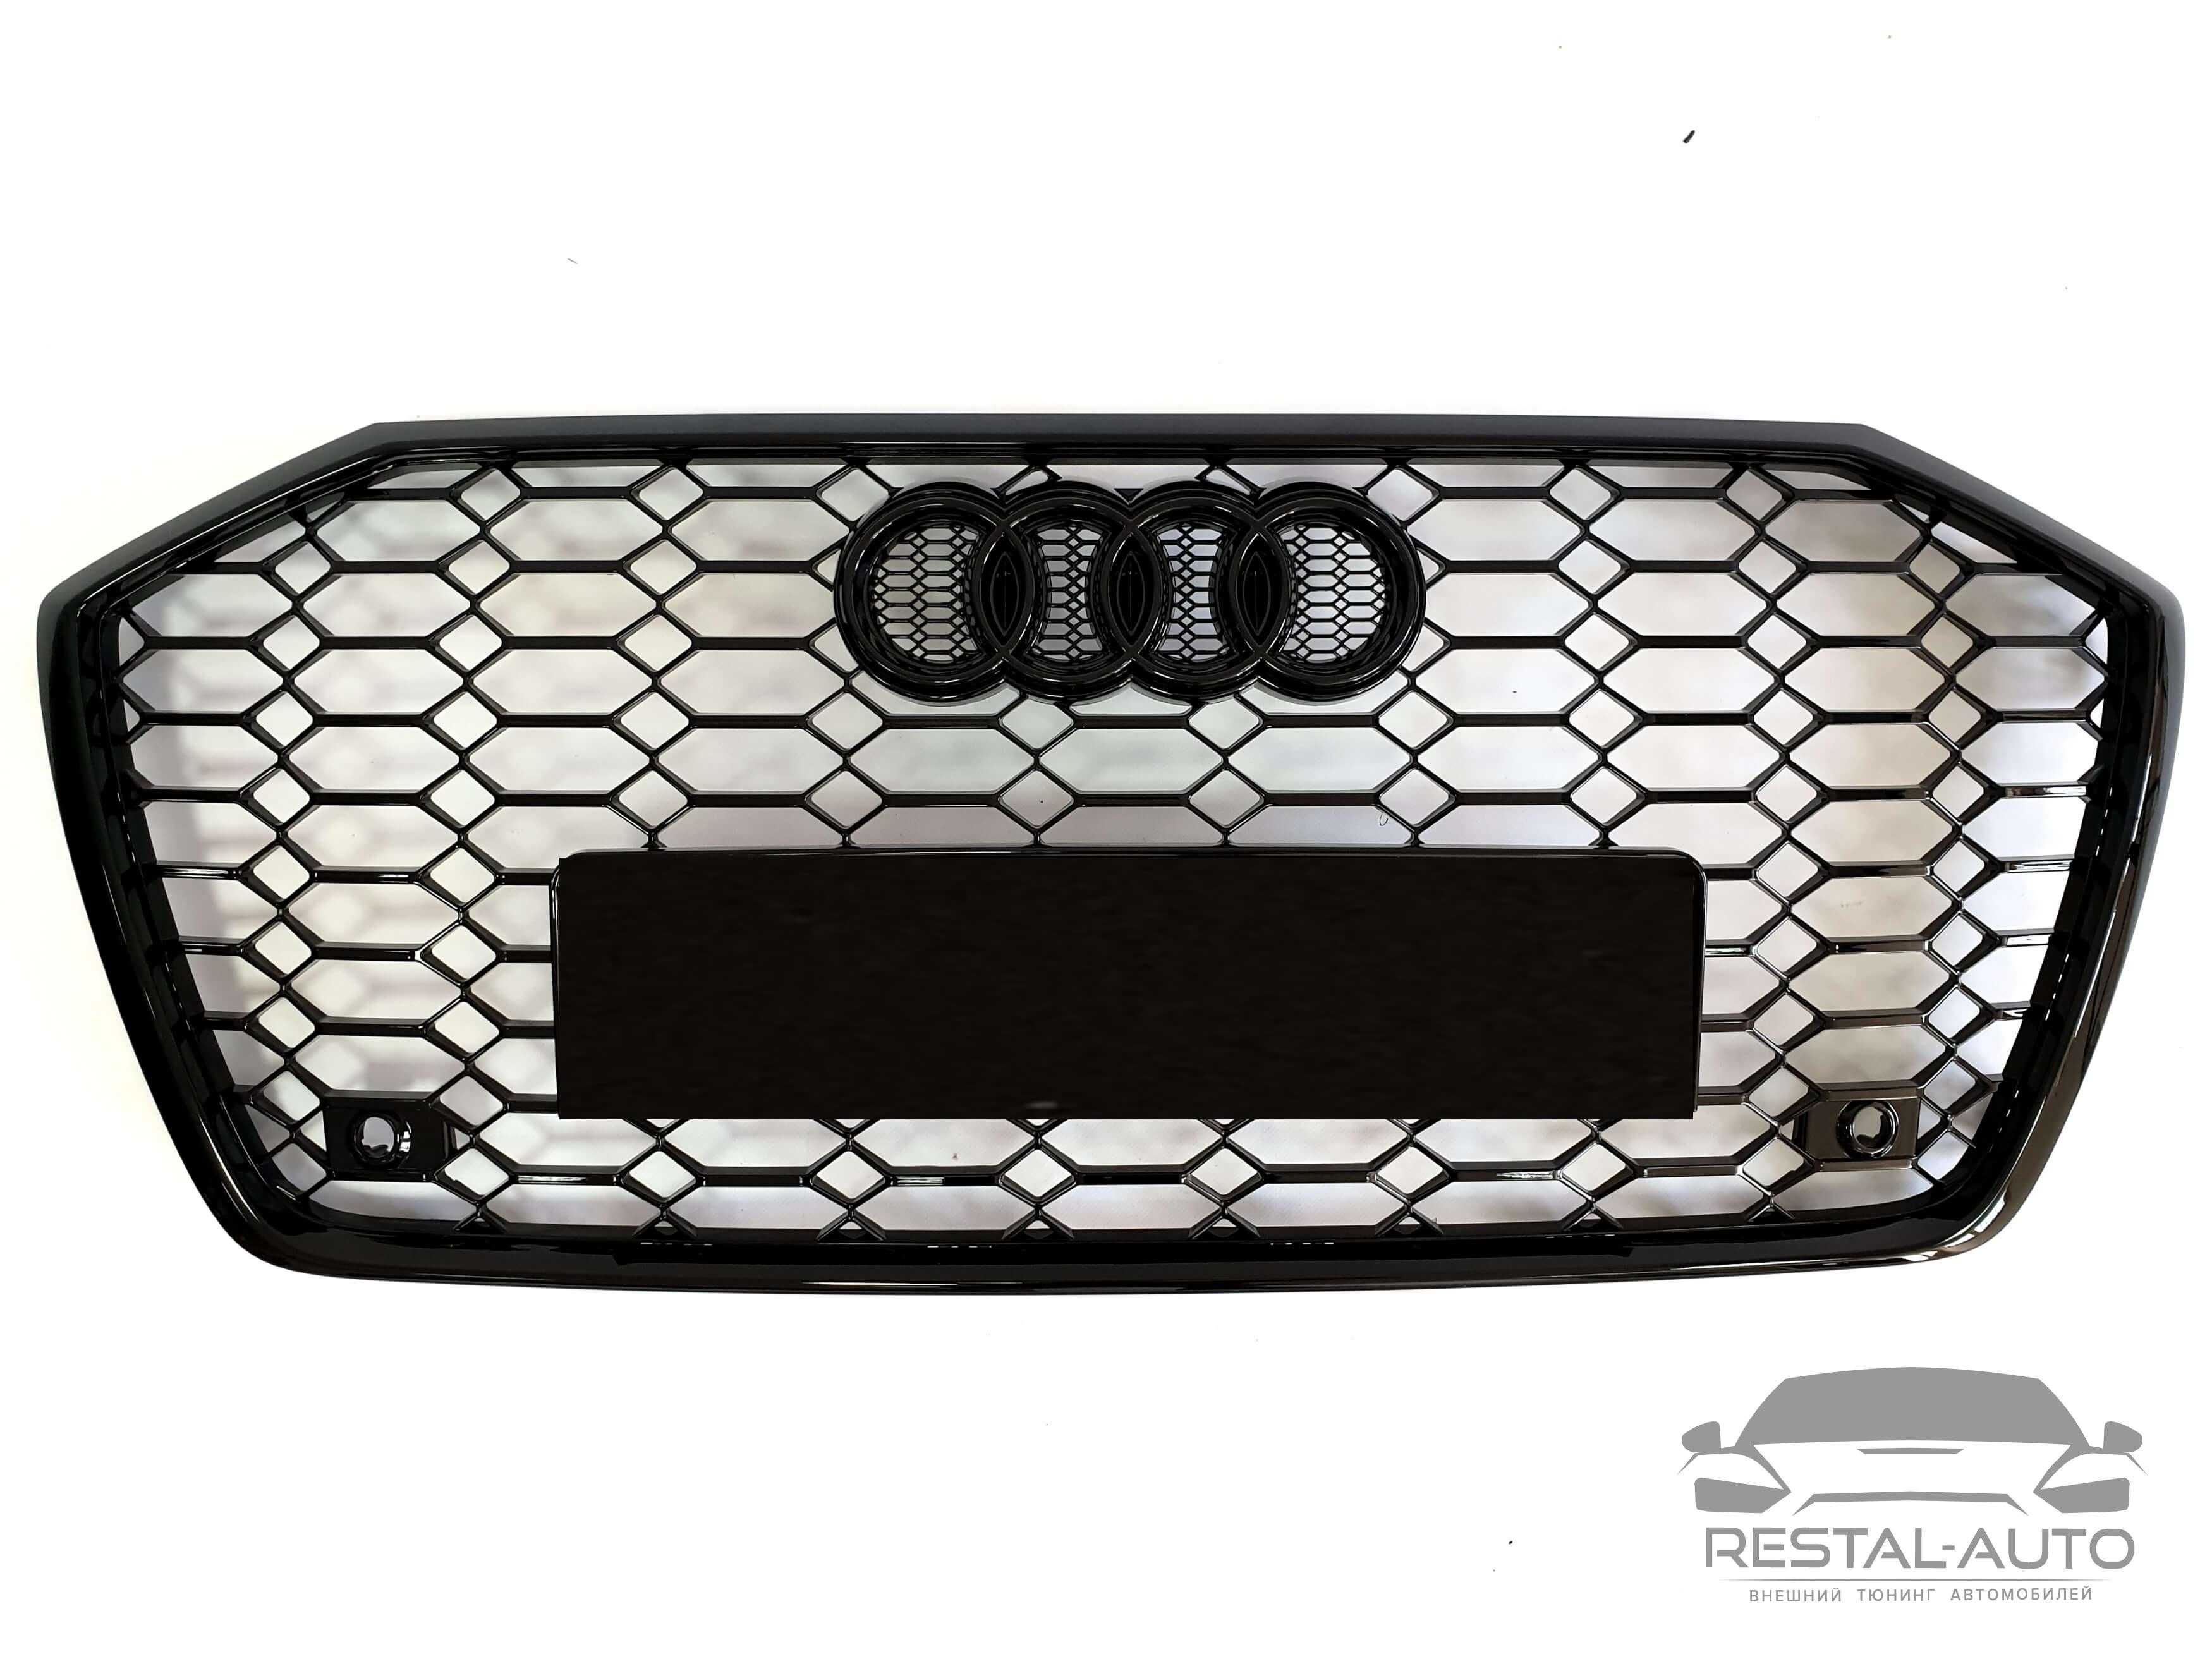 Решетка радиатора в стиле RS на Audi A6 C8 2018-2021 года ( Черная )